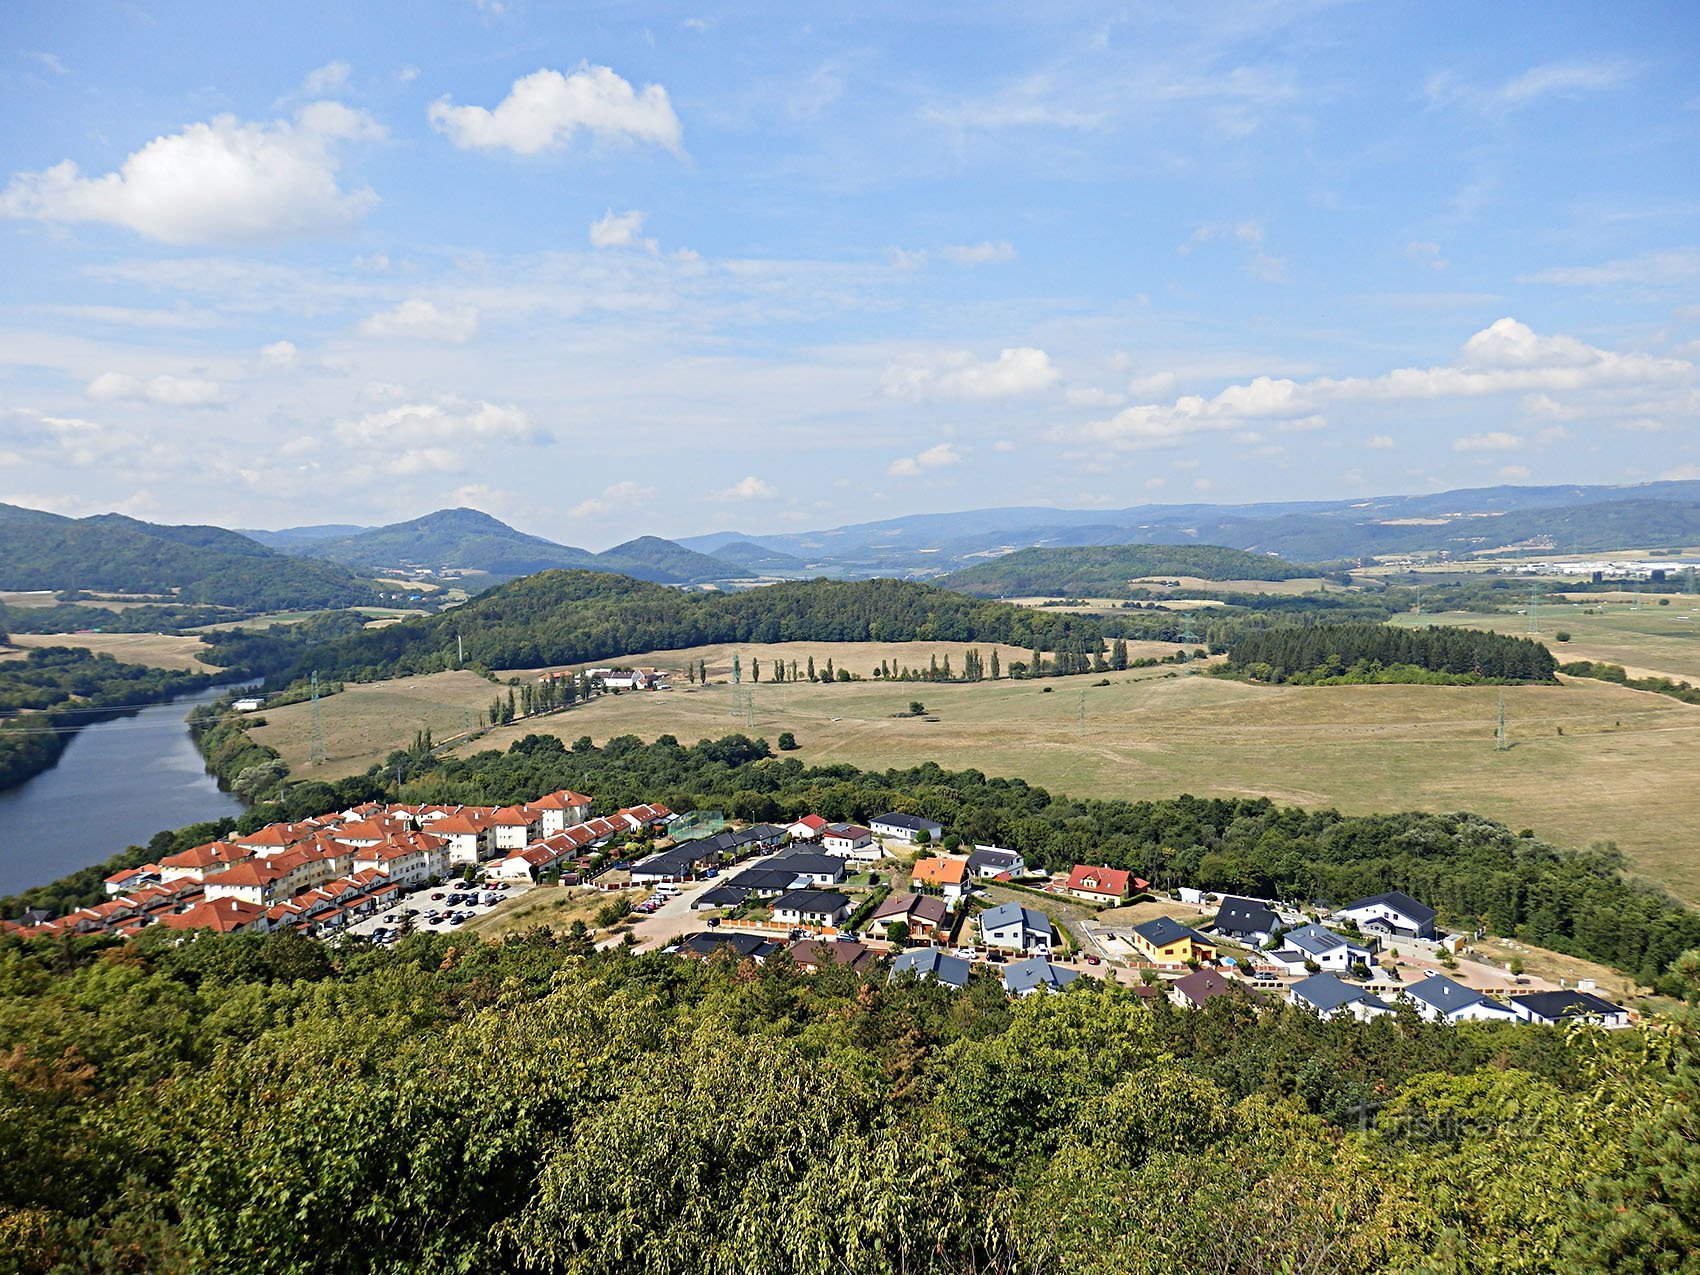 vista dalla torre di avvistamento su Svaté vrch